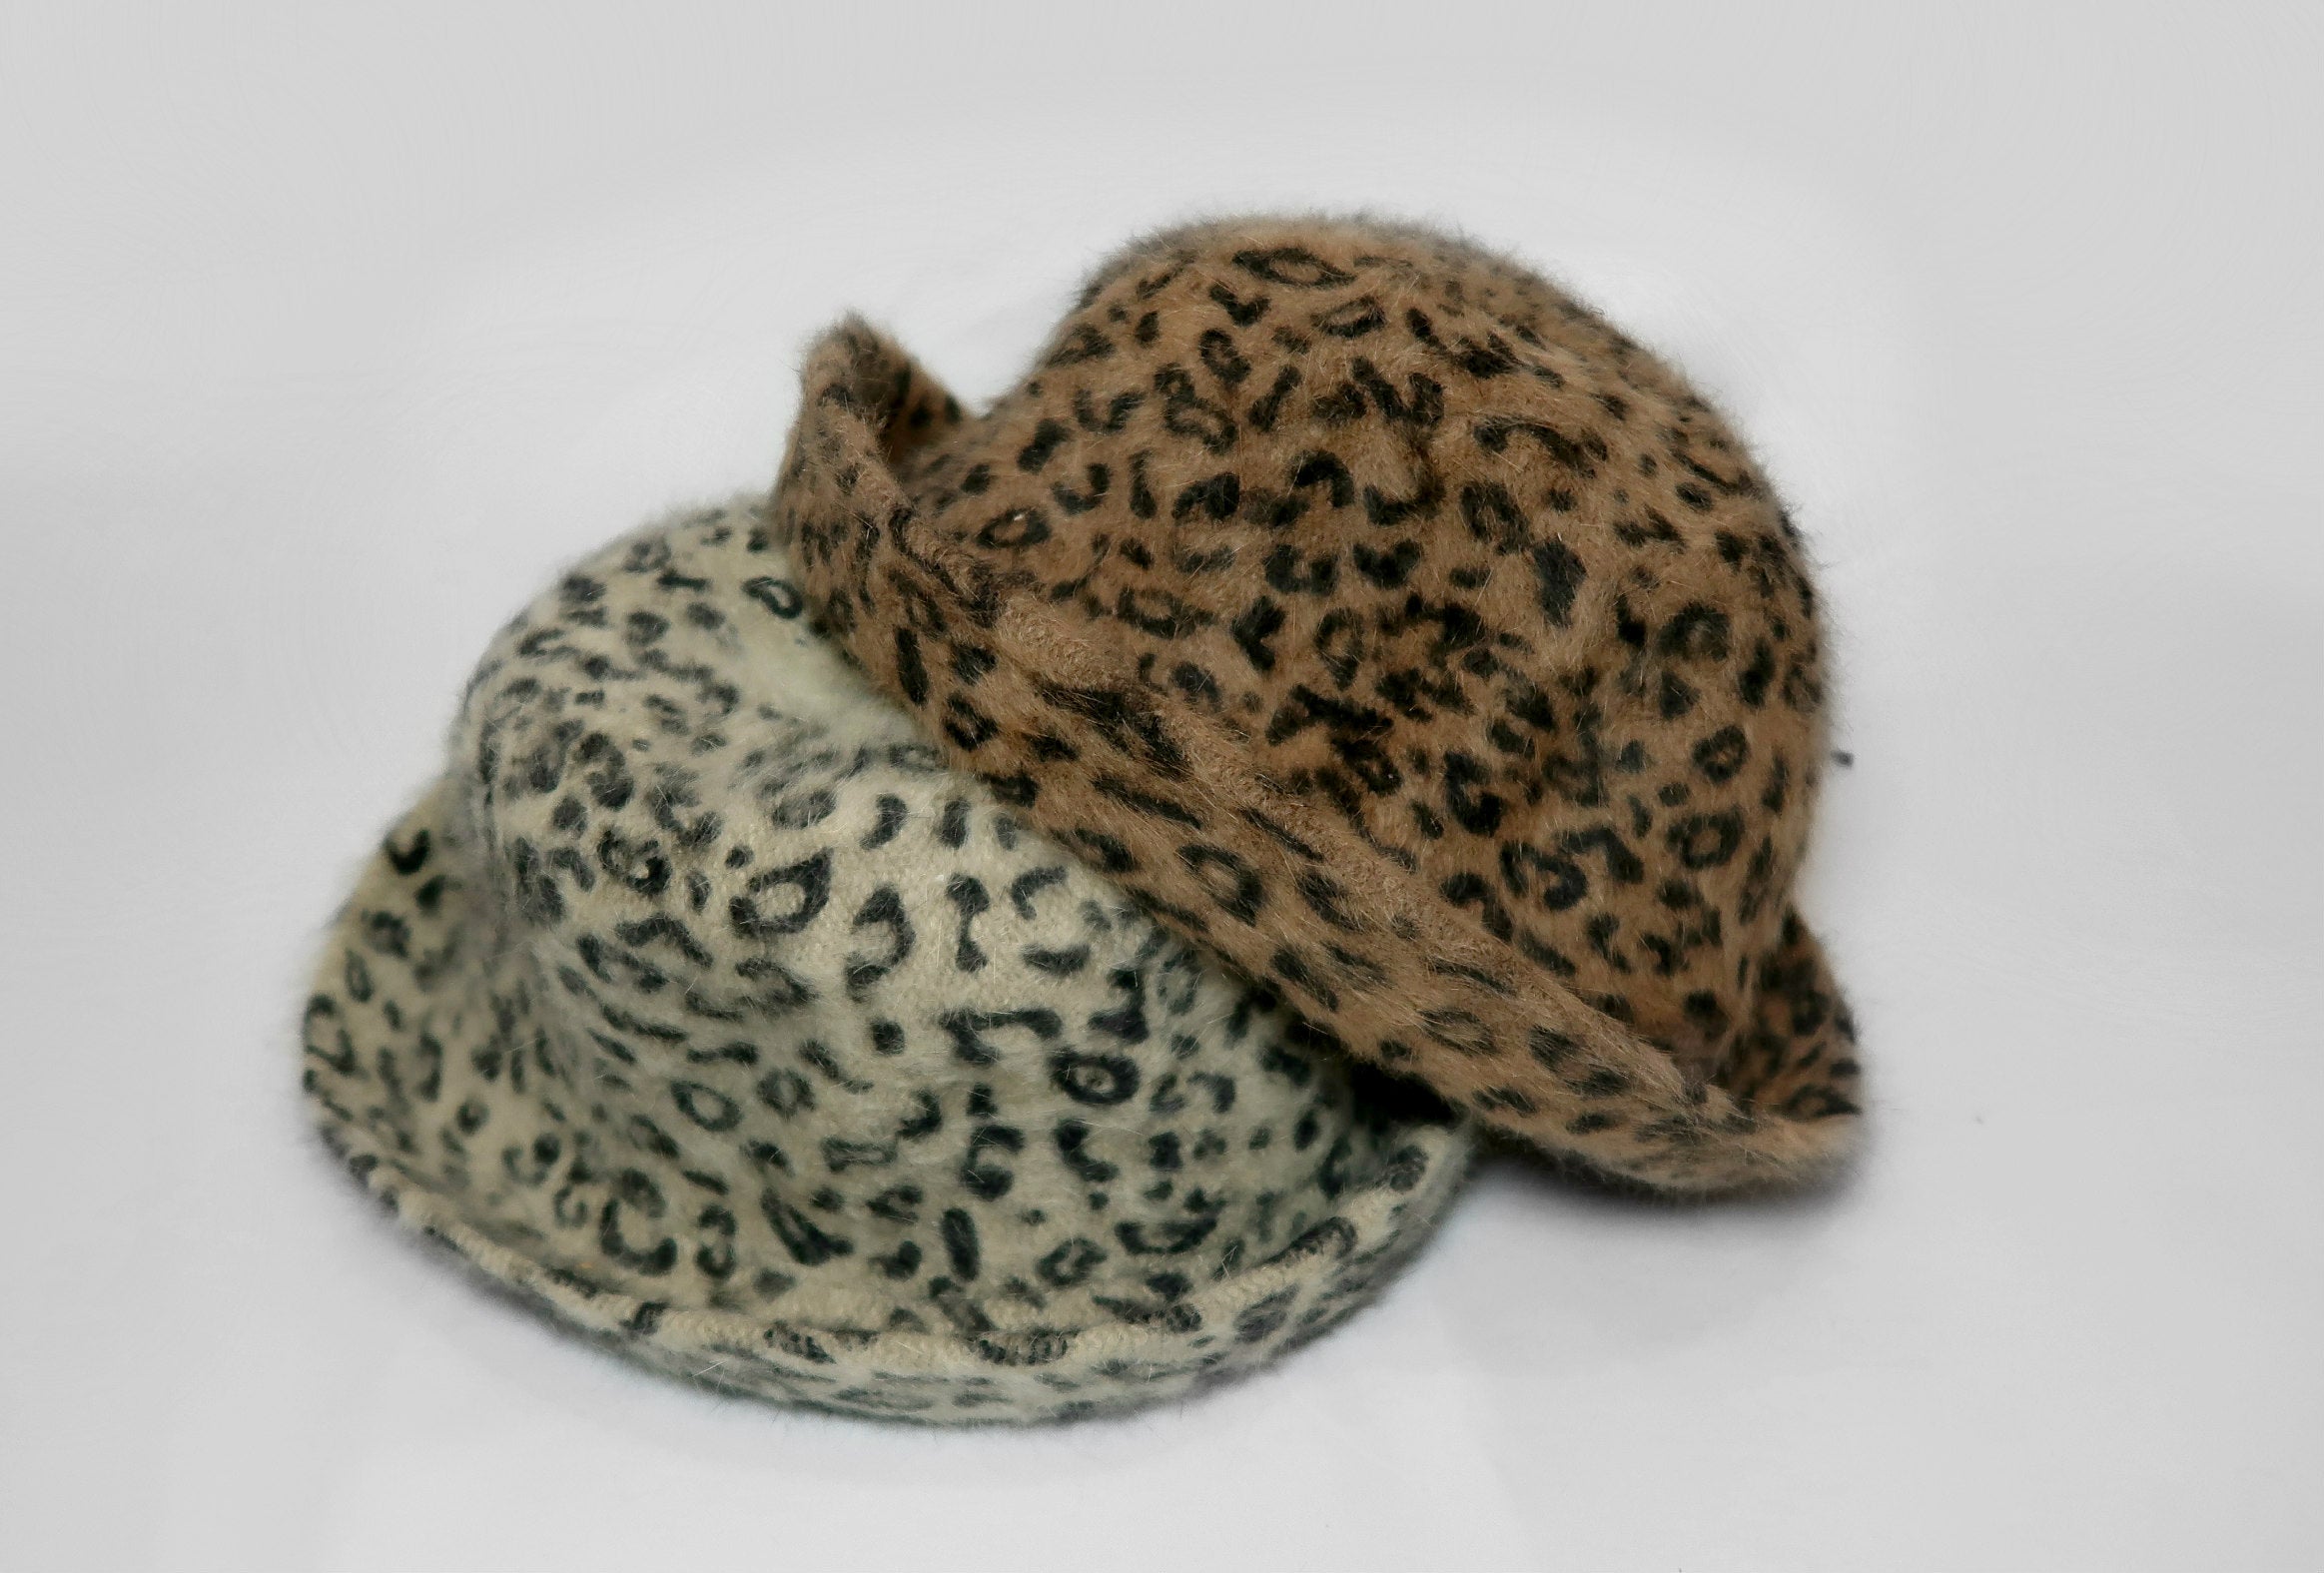 Leopard Print Furry Bowler Hat